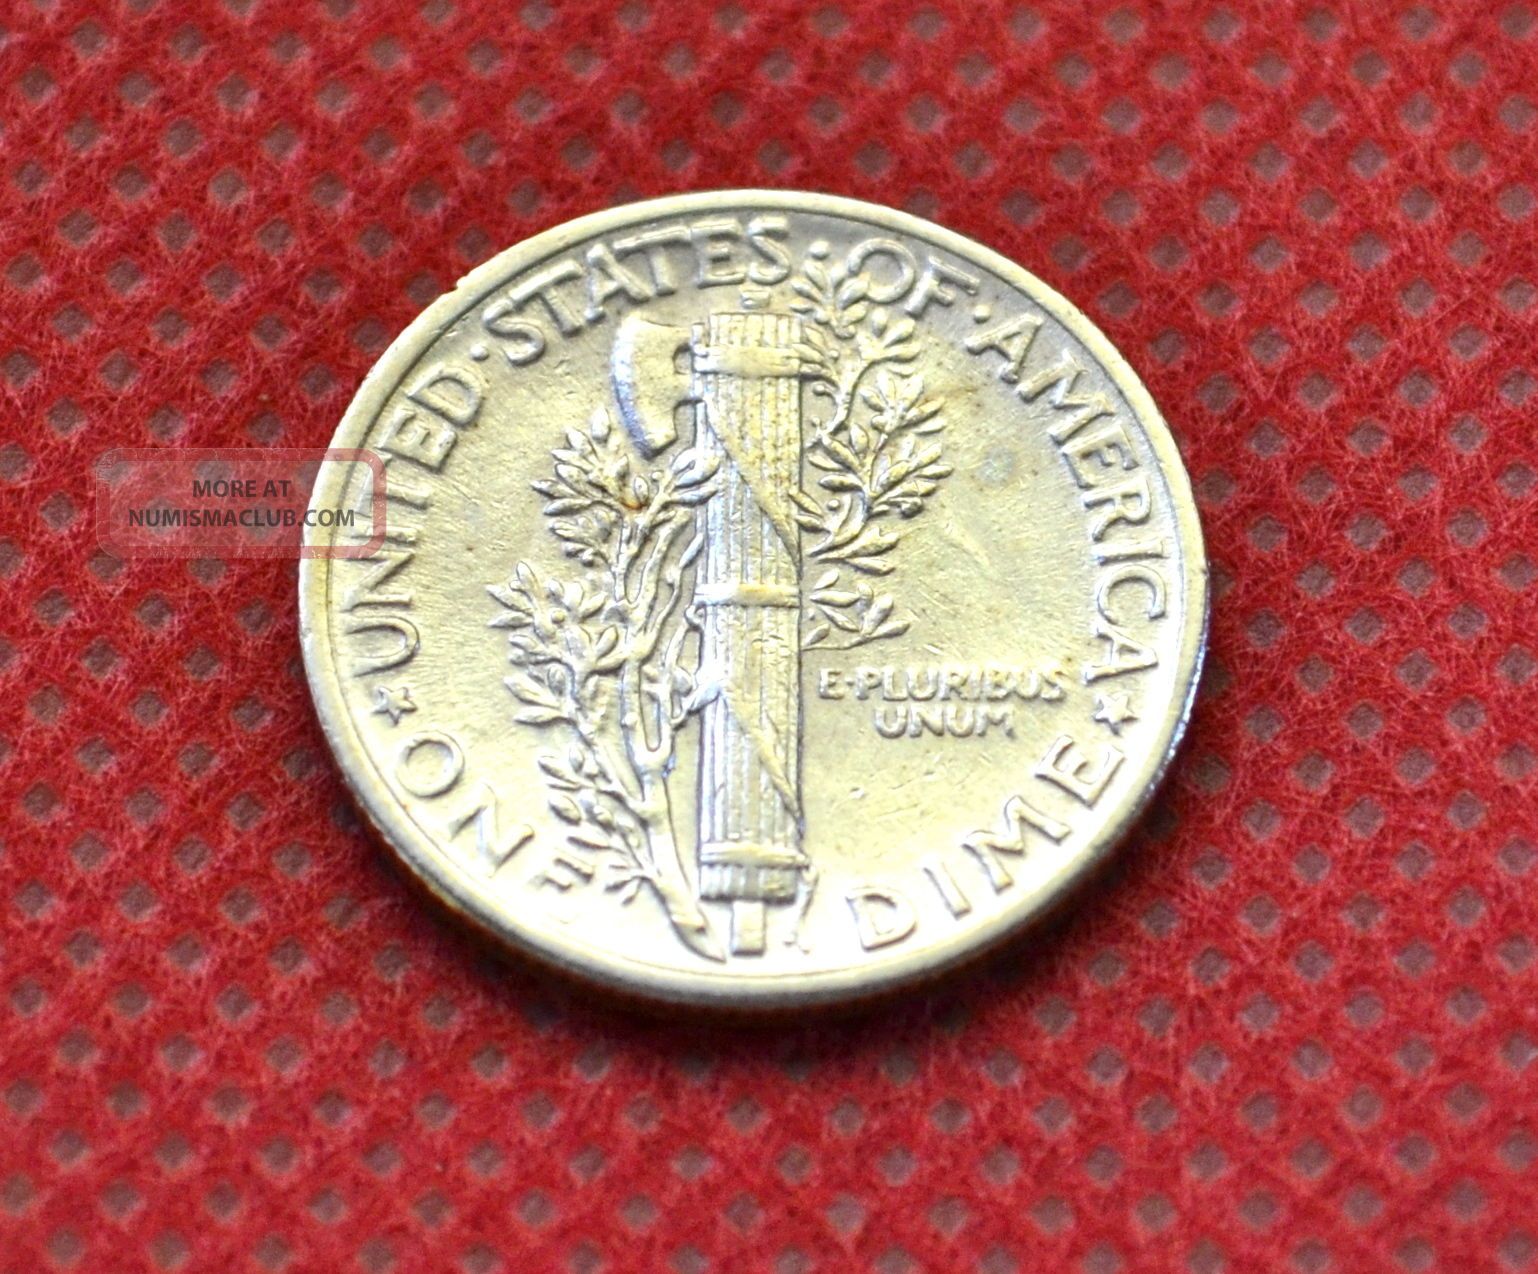 1942 mercury dime no mint mark